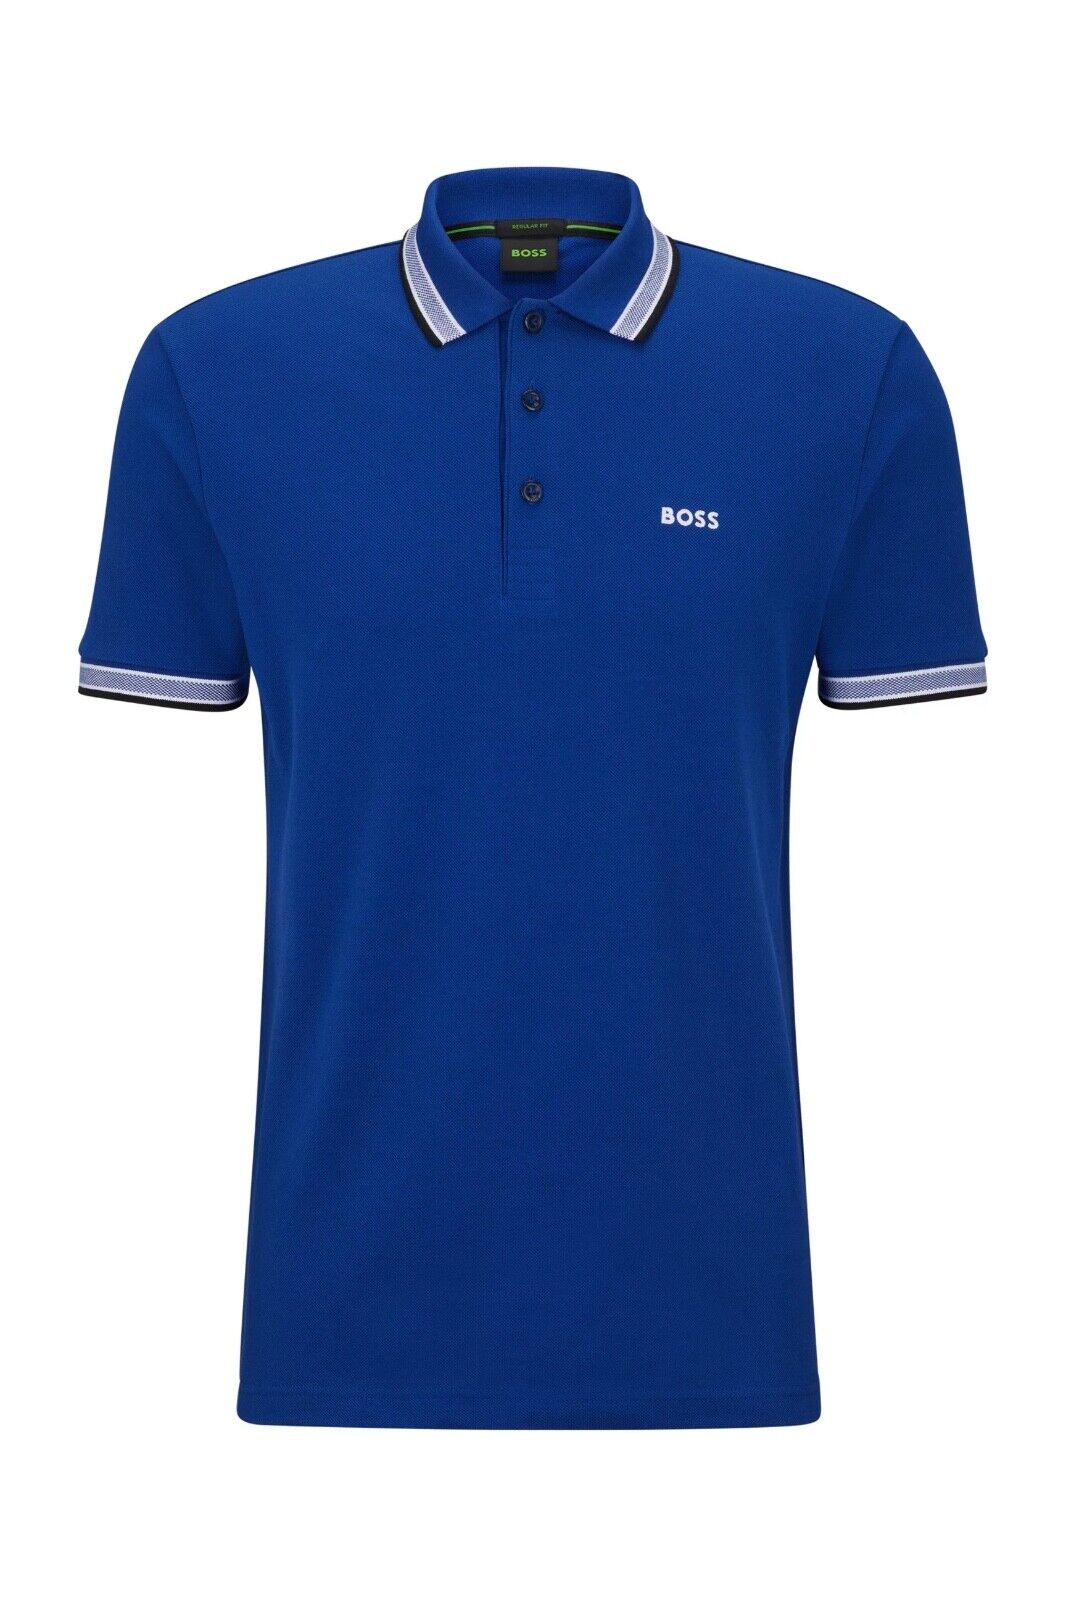 HUGO BOSS Paddy Regular Fit Men’s Polo Shirt in Bright Blue 50505600 438